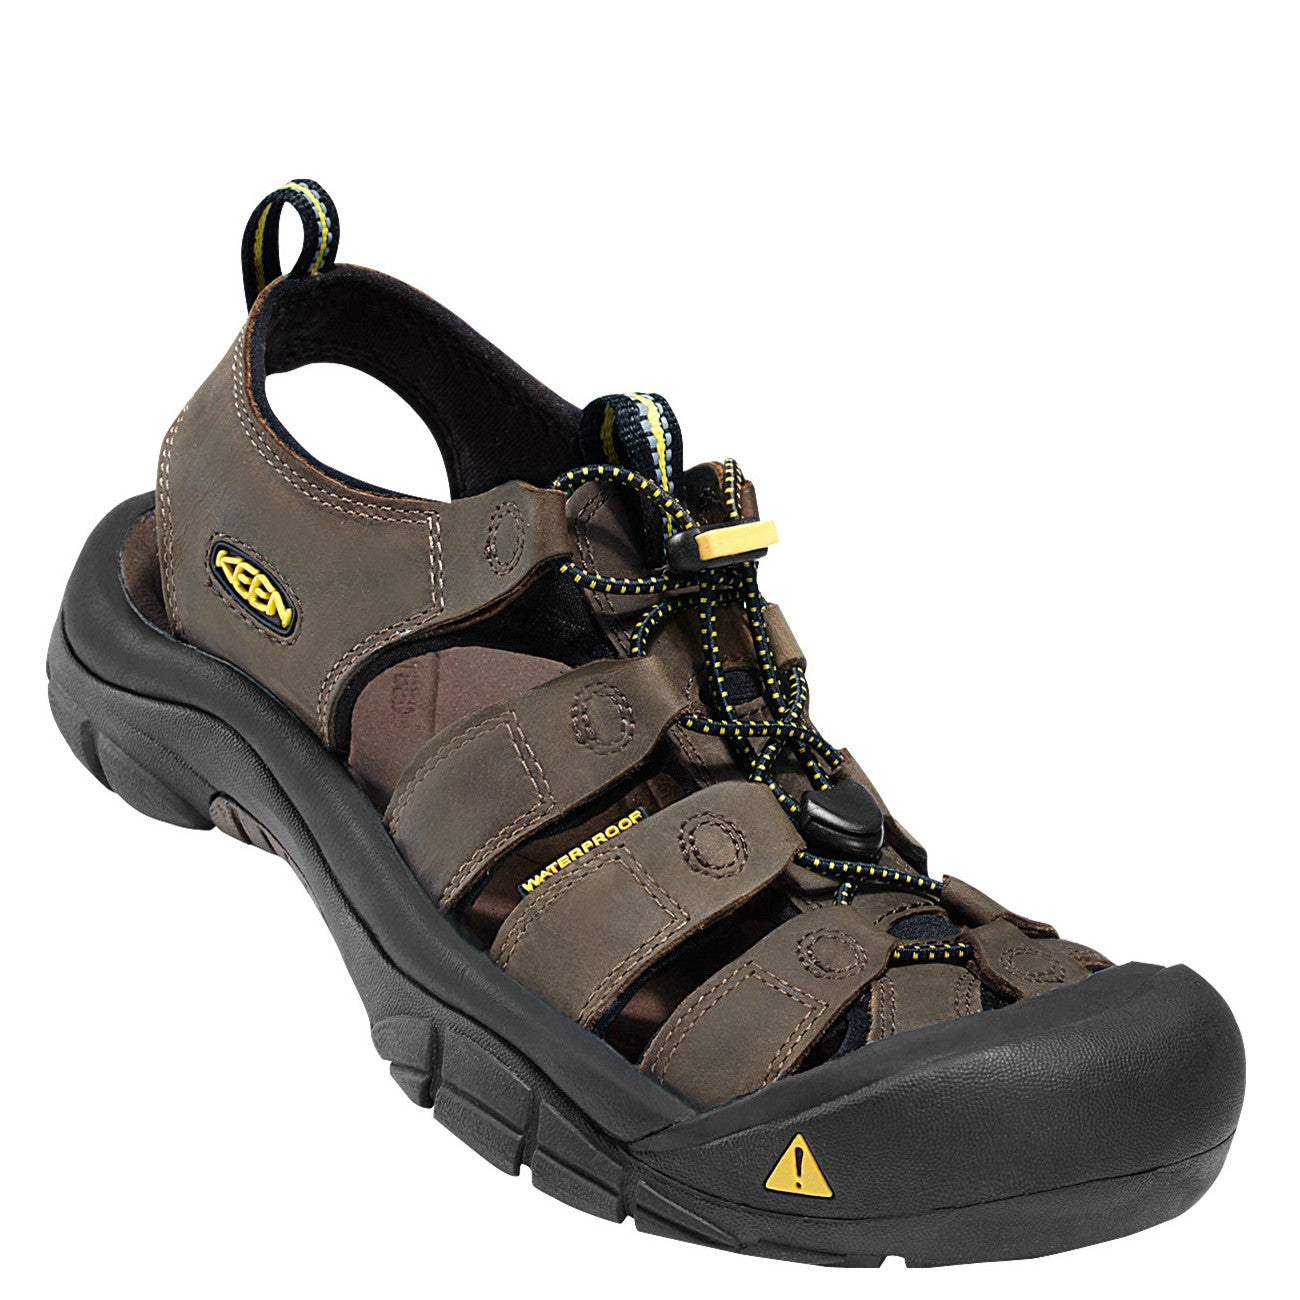 birkenstock hiking shoes